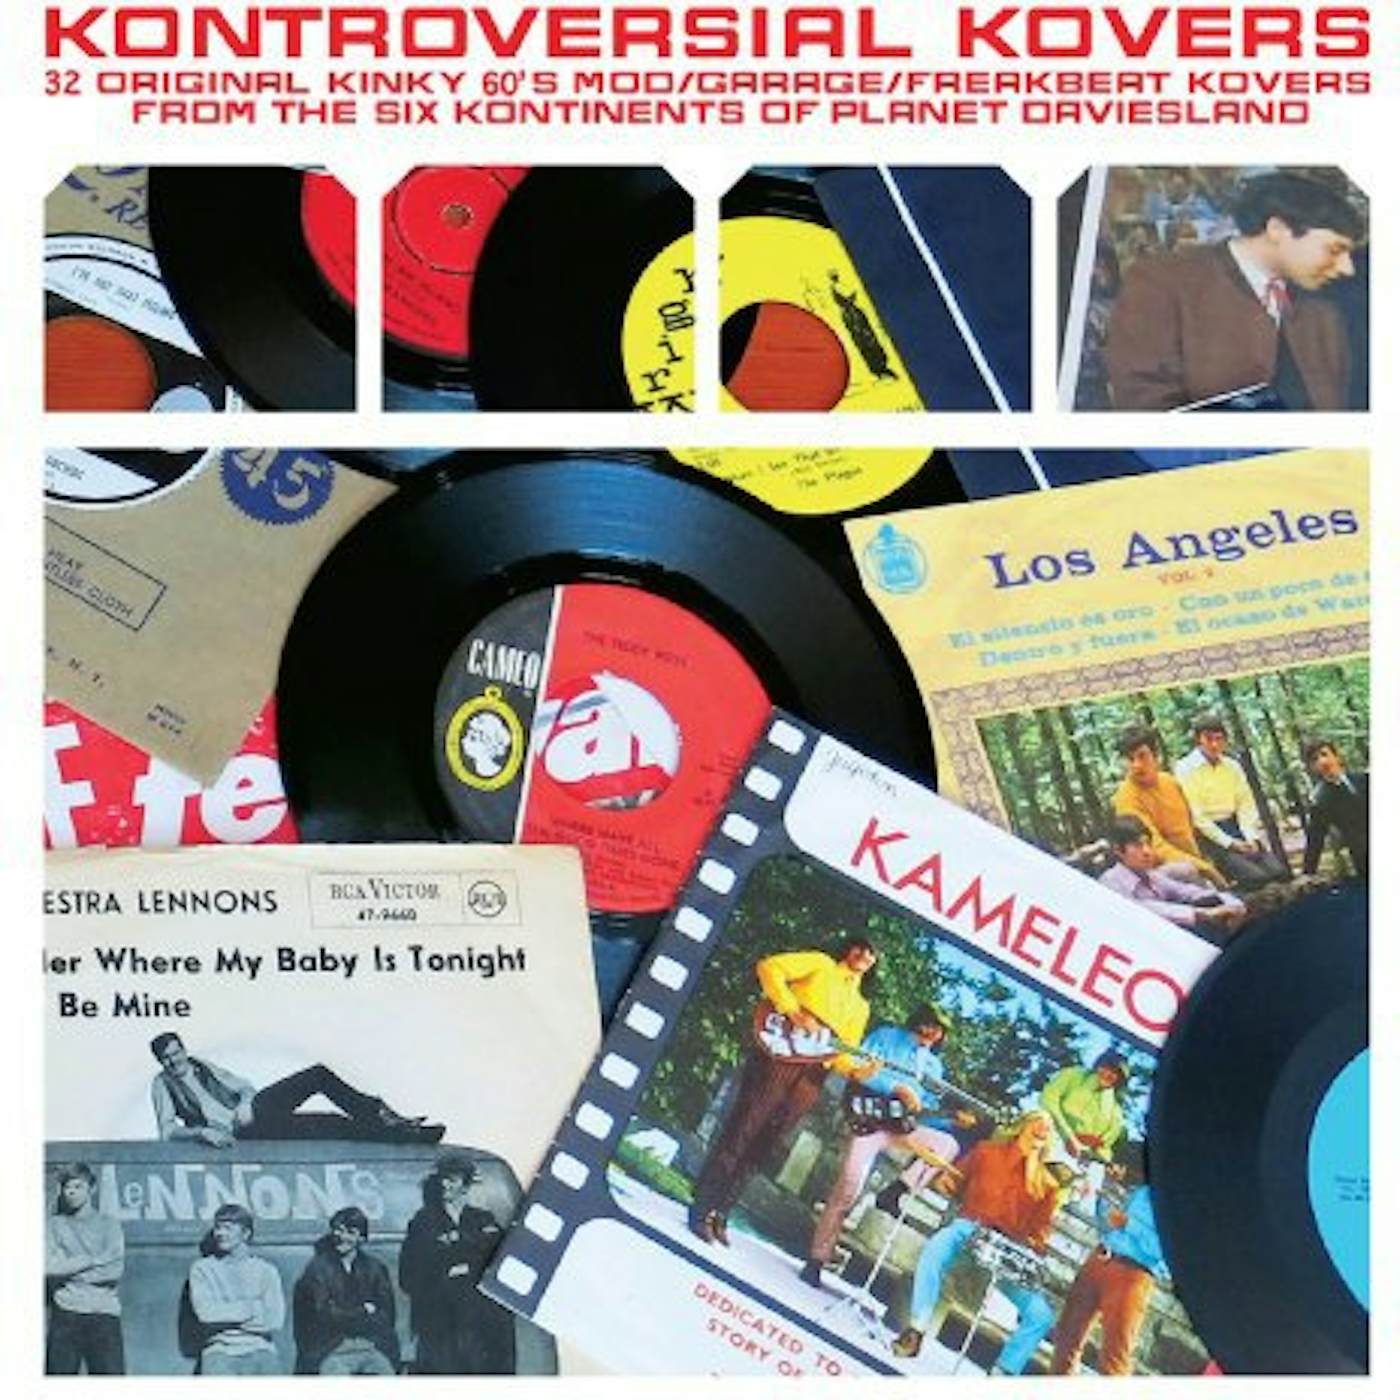 KONTROVERSIAL KOVERS: 32 KINKY 60'S MOD / VAR Vinyl Record